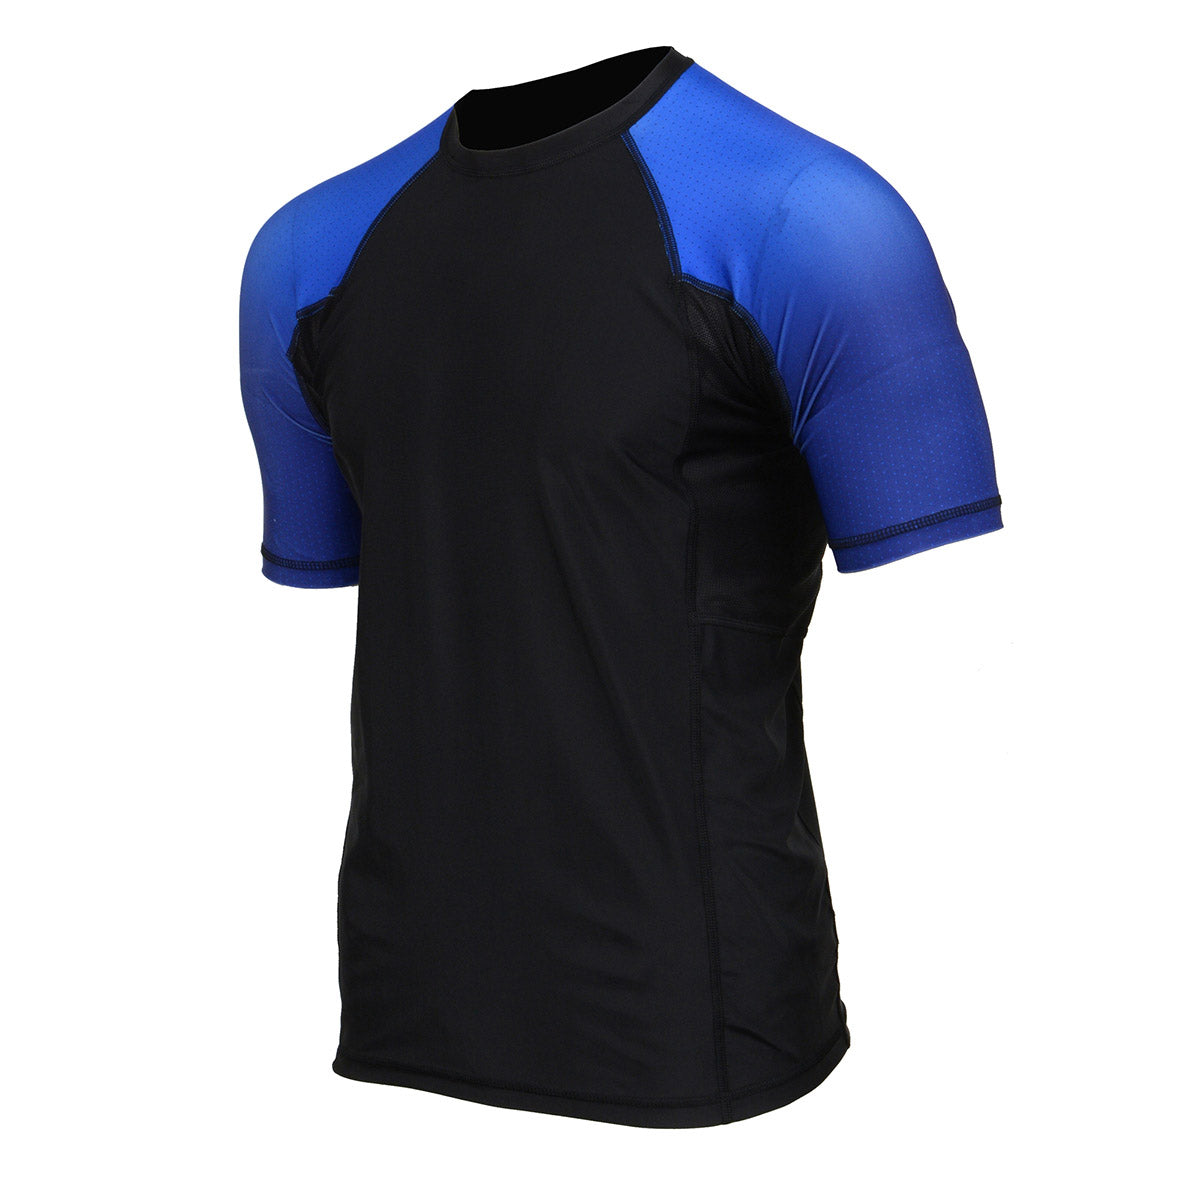 X-Fitness XFM7001 Men's Black and Blue Short Sleeve Compression Rash Guard Athletic Shirt- MMA, BJJ, Wrestling, Cross Training